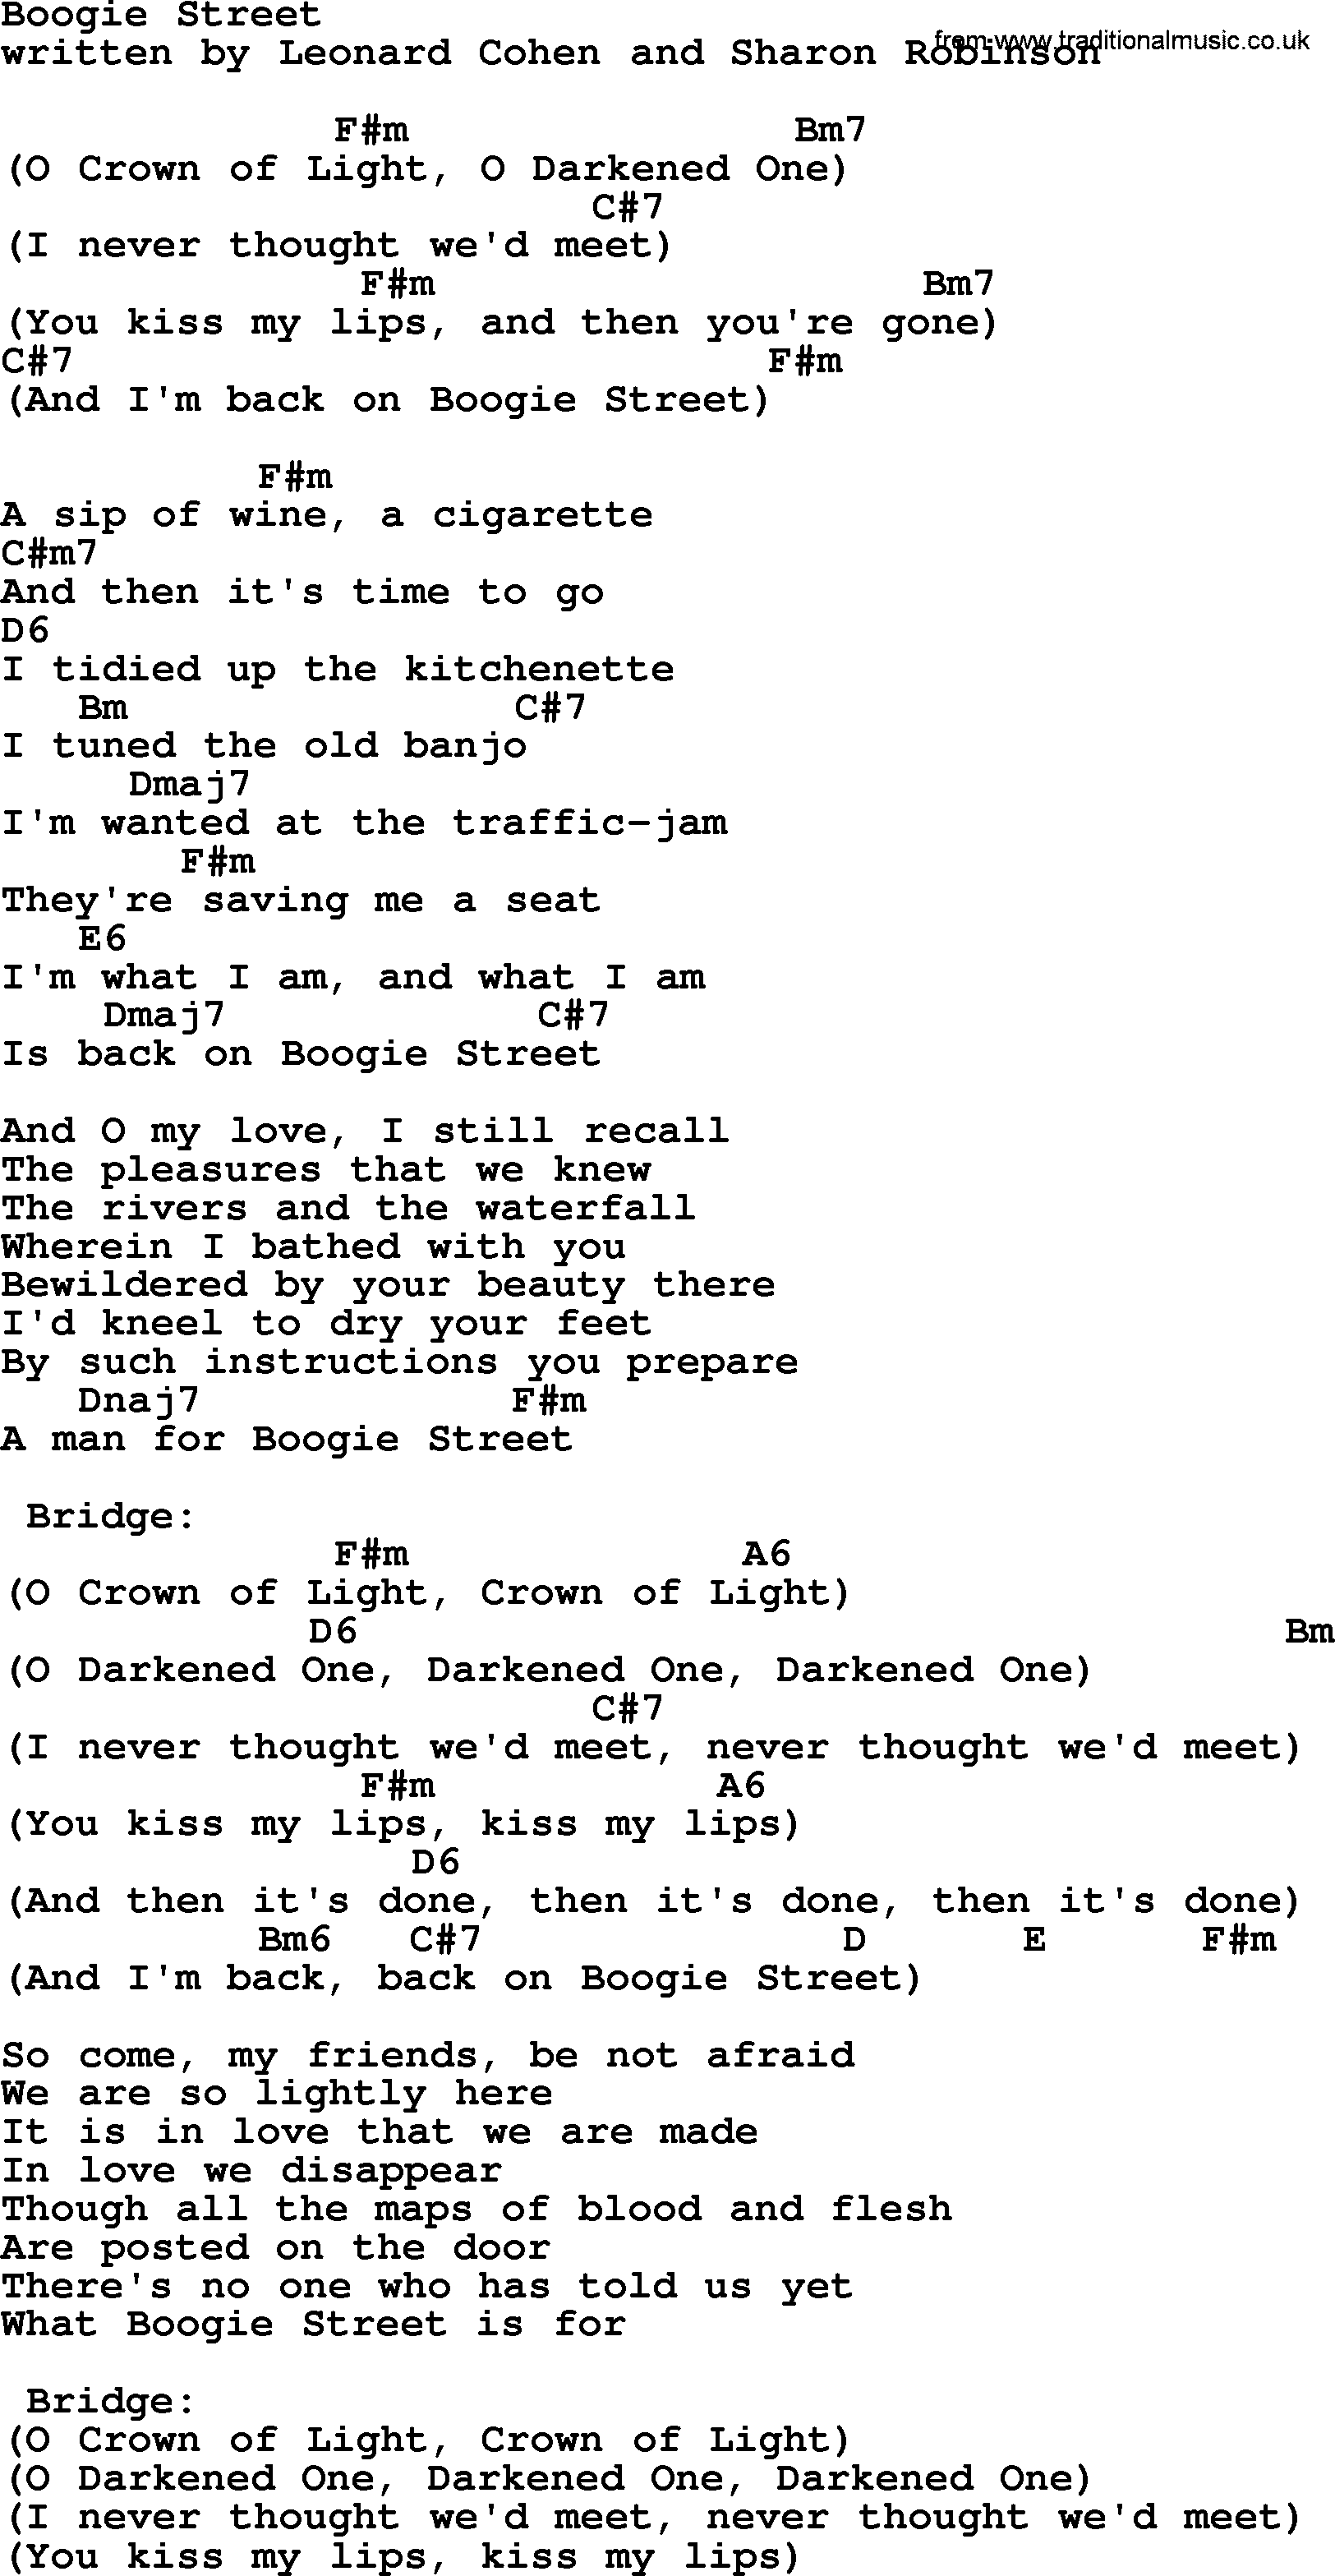 Leonard Cohen song Boogie Street, lyrics and chords